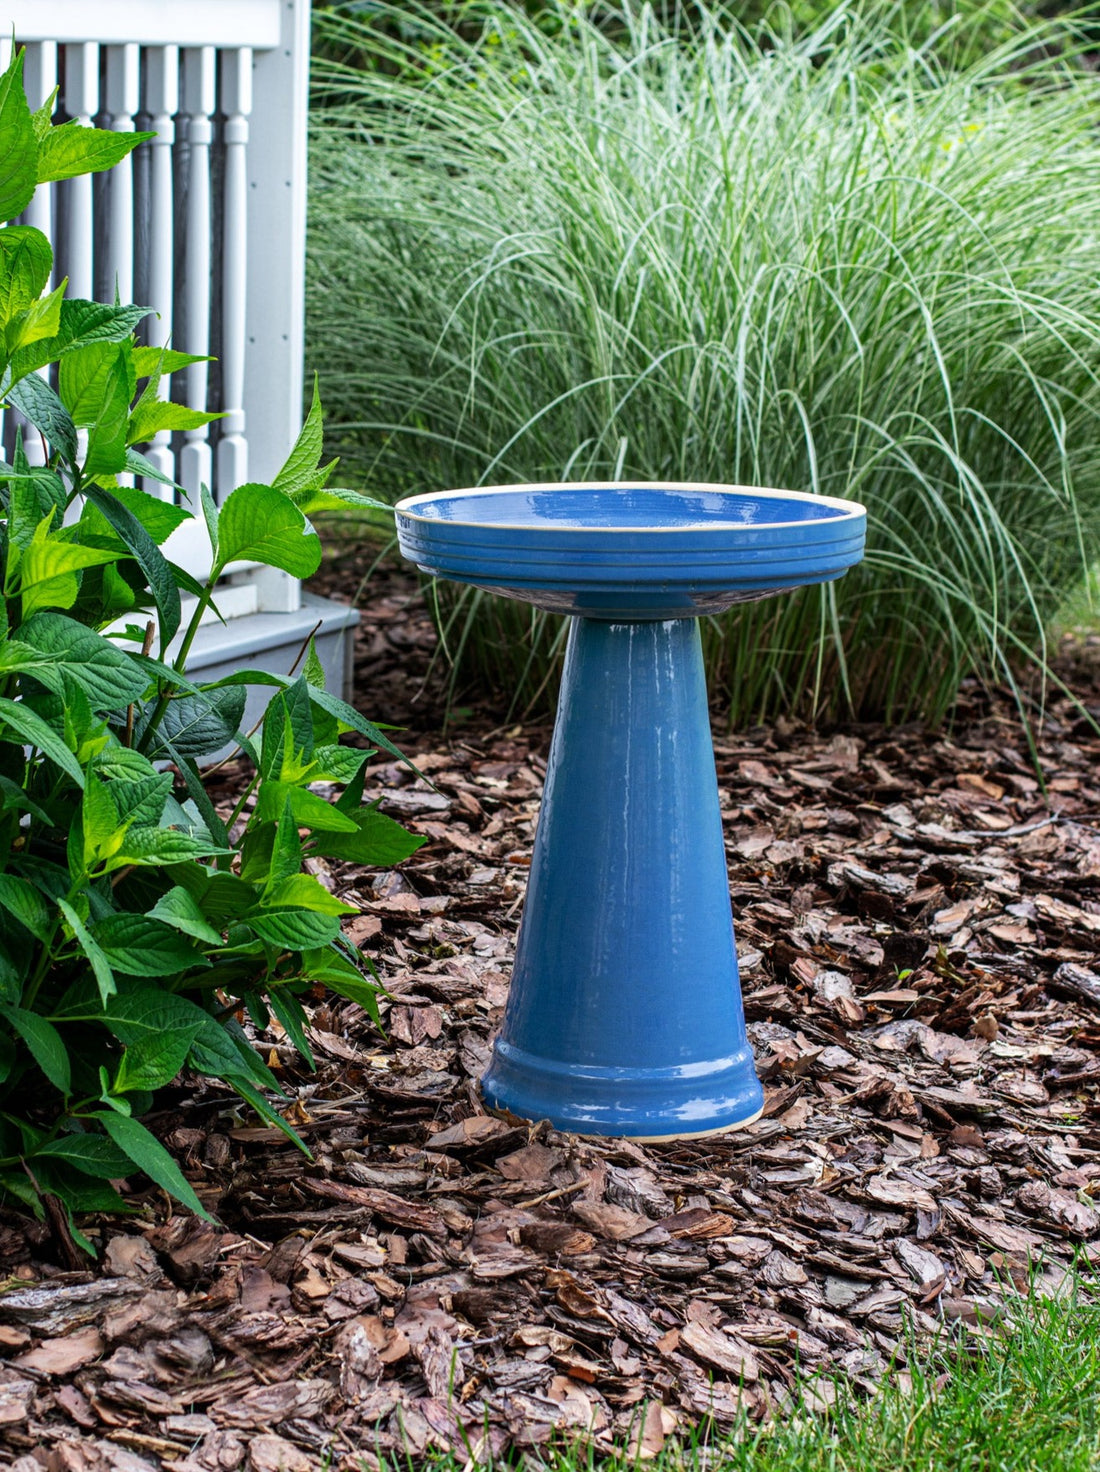 ceramic light blue birdbath with simple modern smooth design in a landscaped garden setting